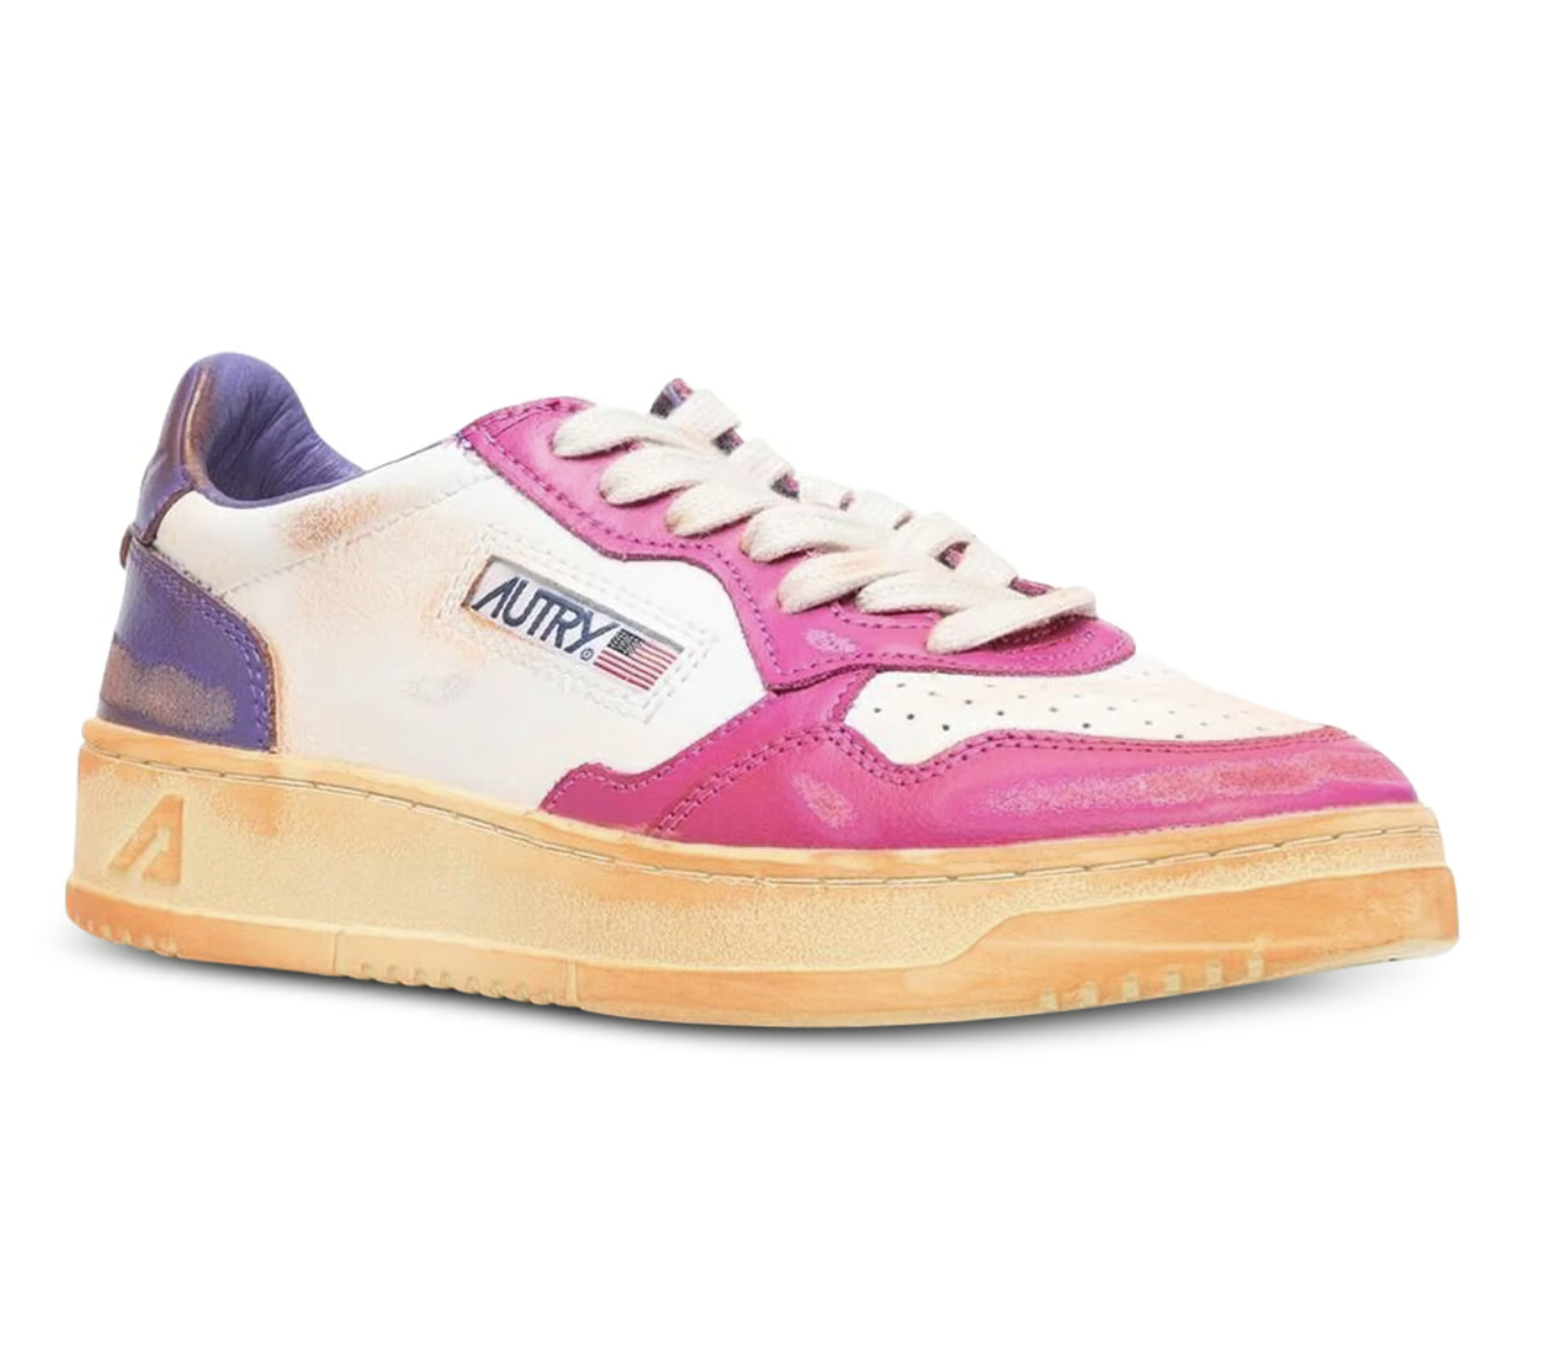 Autry - Super Vintage Sneaker in Pink/Purple/White